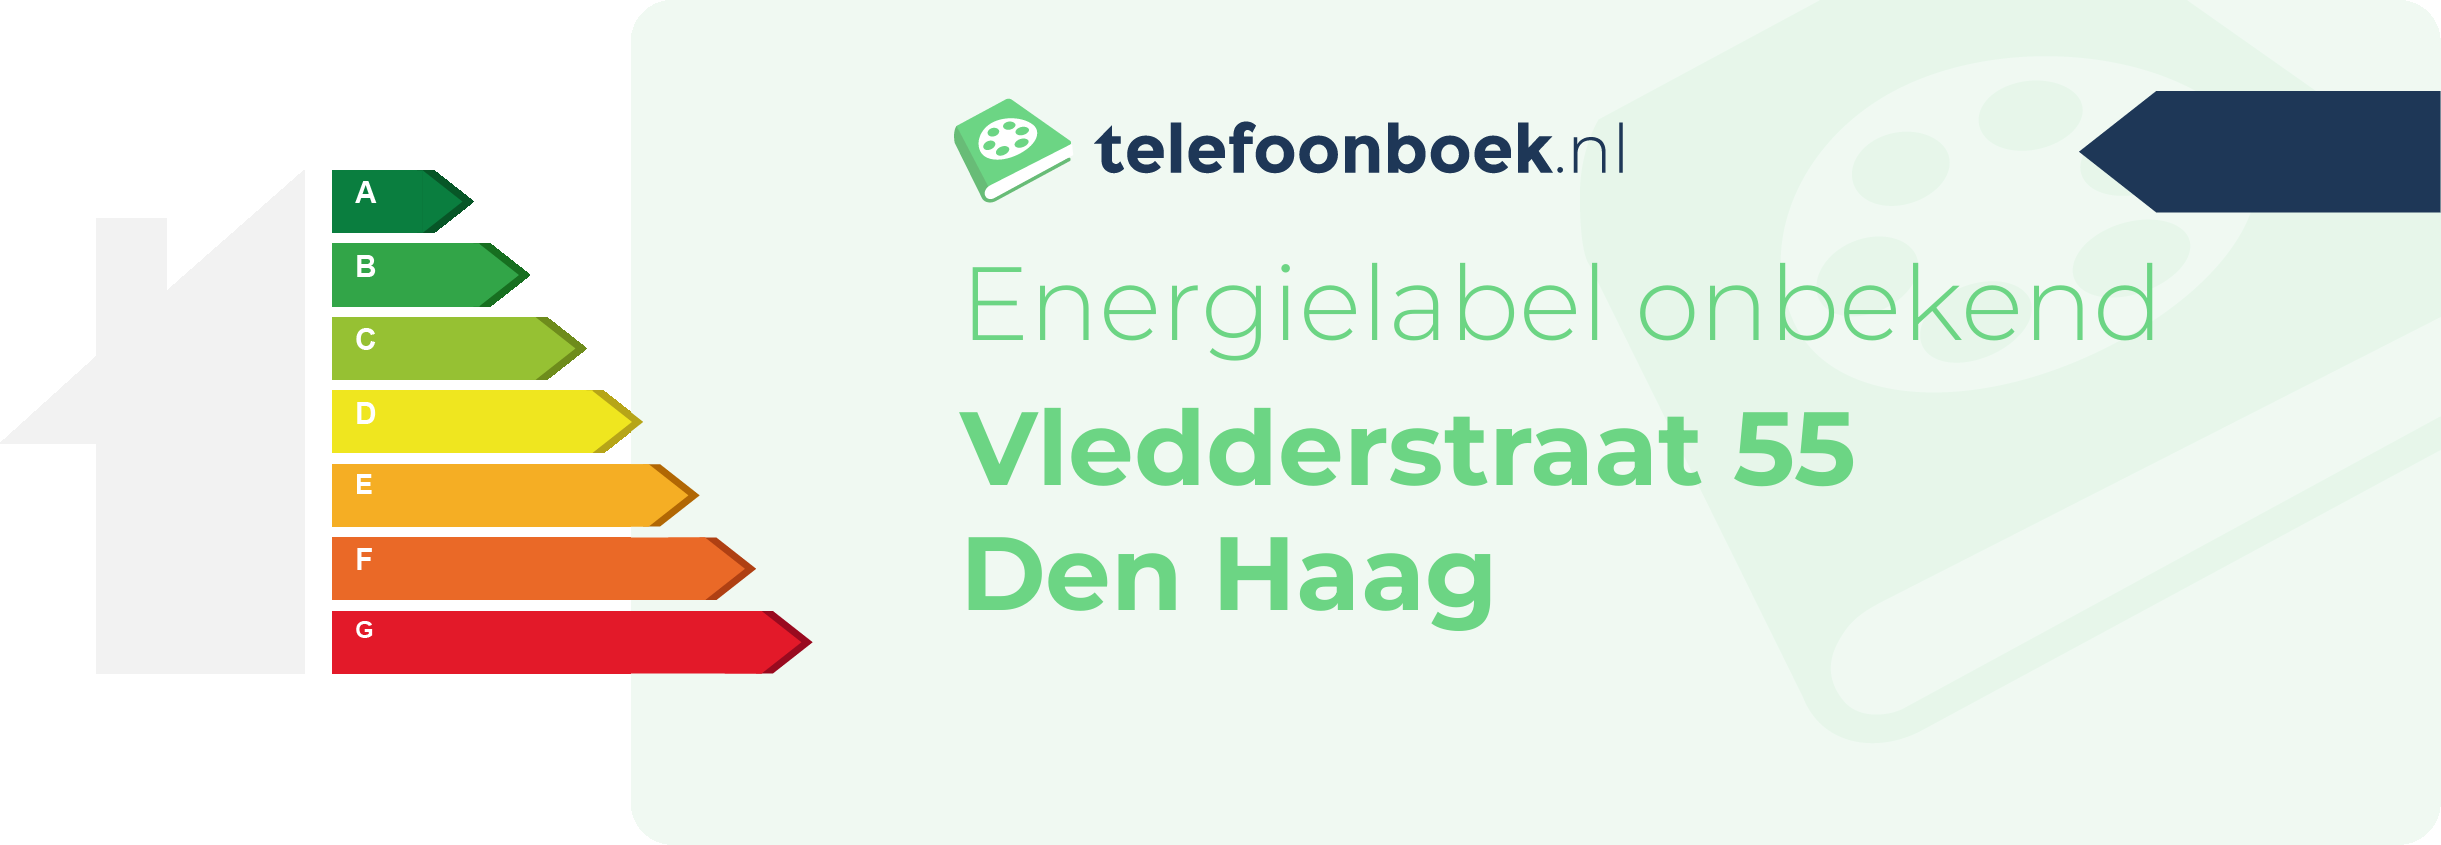 Energielabel Vledderstraat 55 Den Haag